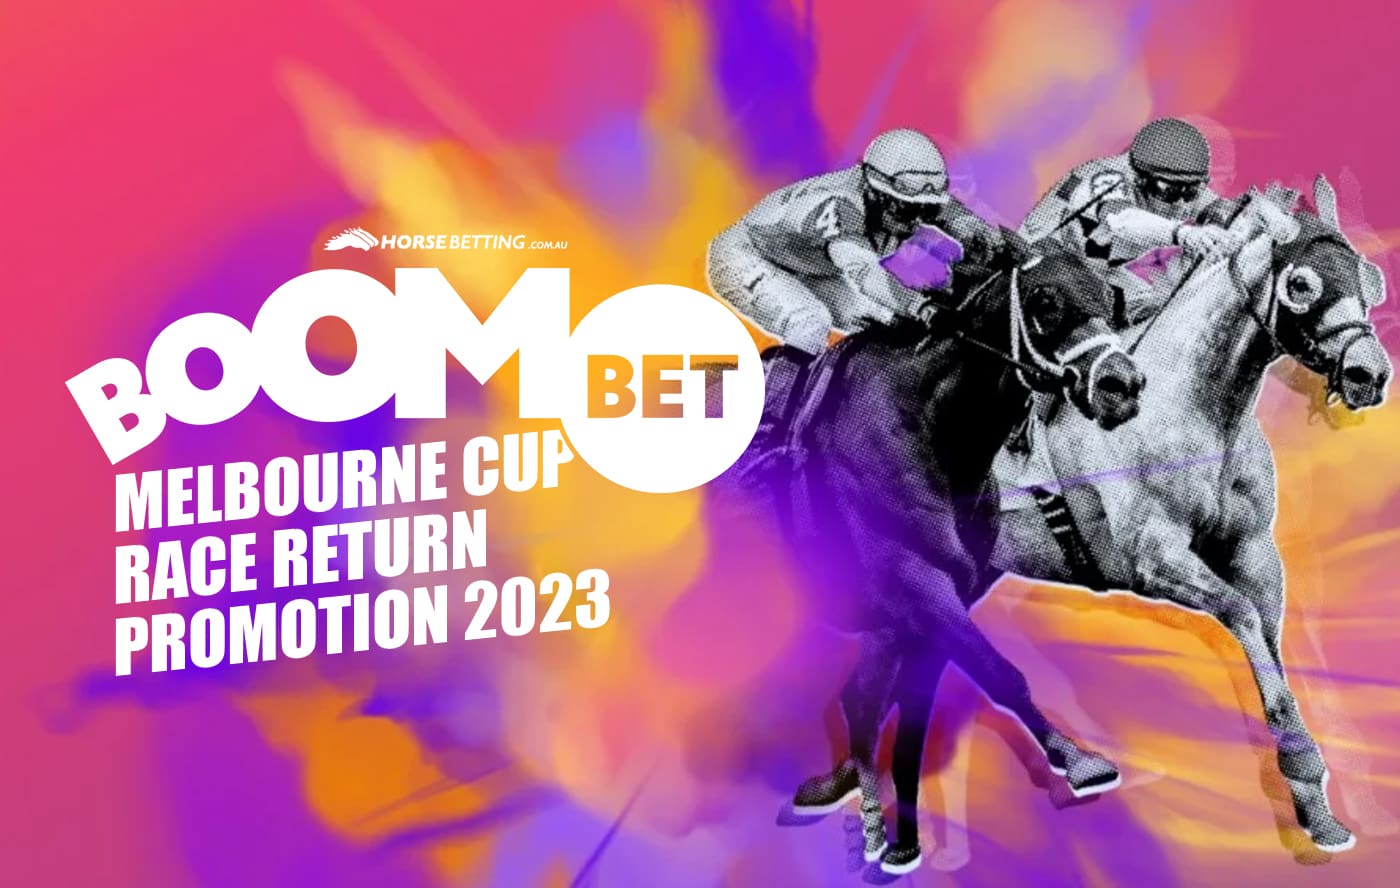 Boombet.com.au Melbourne Cup cash back bonus offer 2023